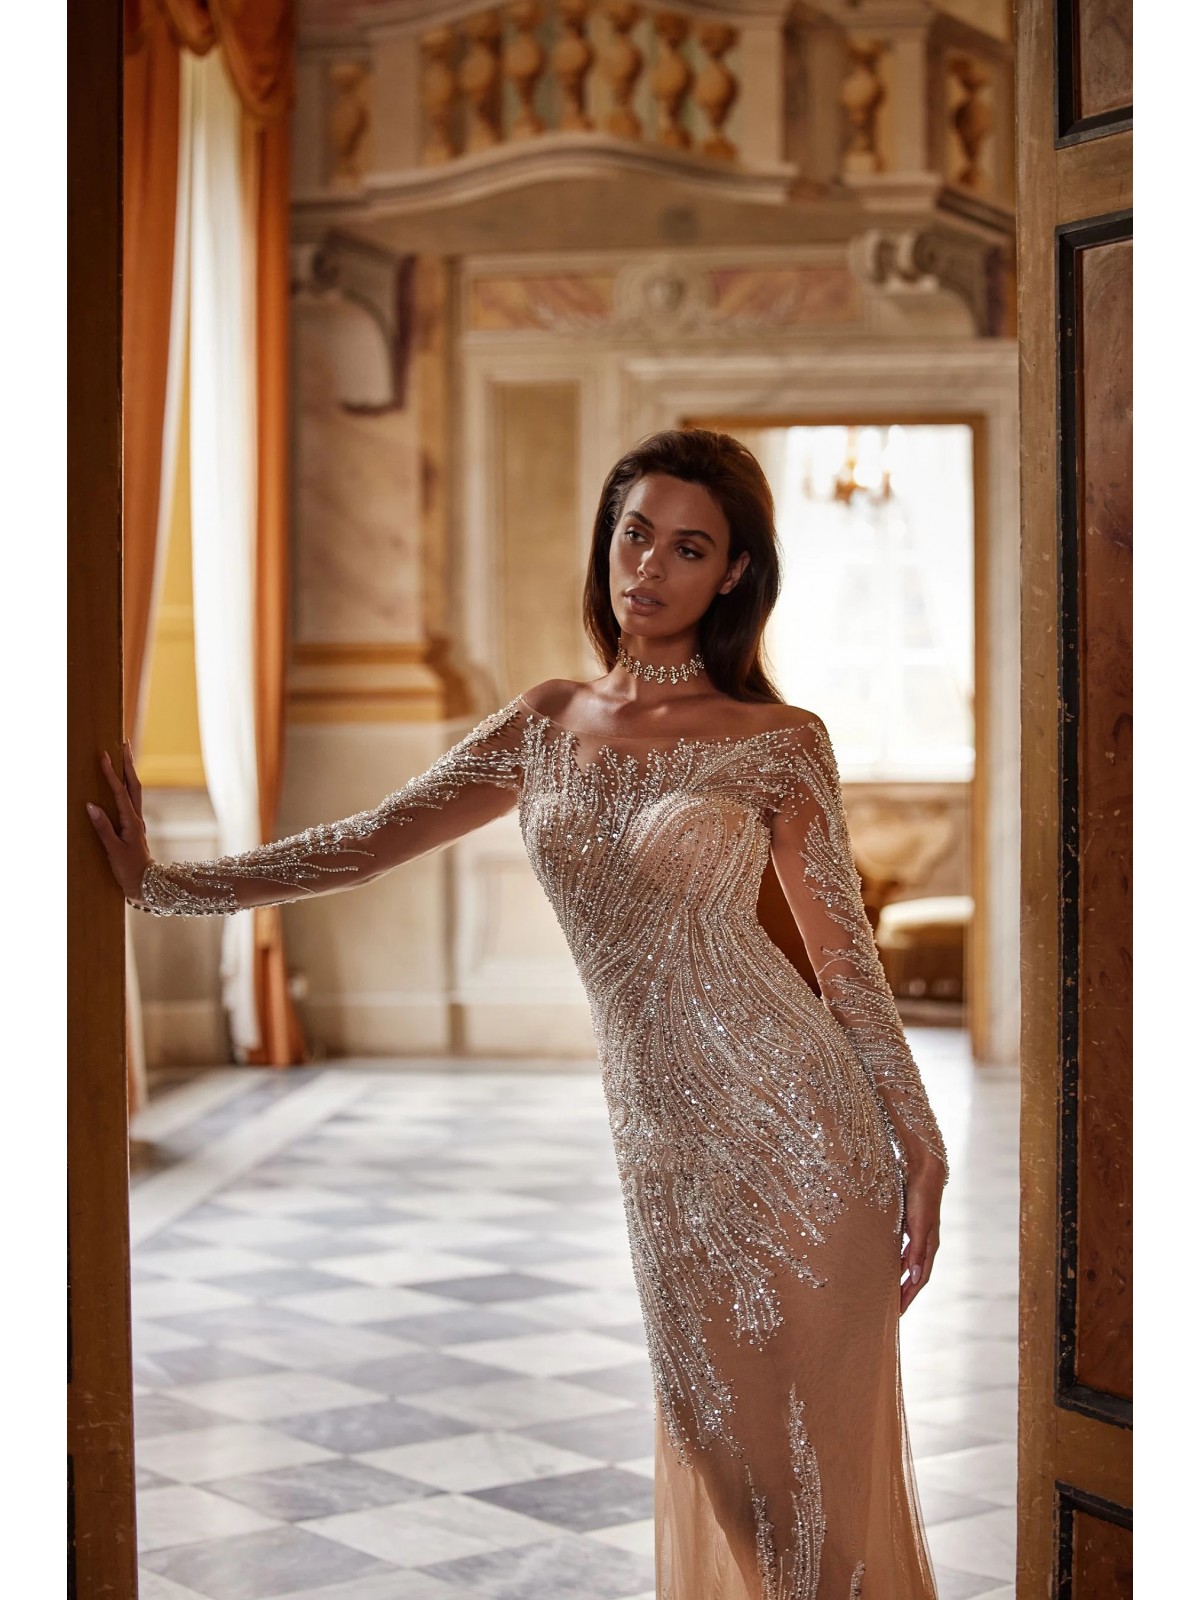 Luxury Wedding Dress/ Diamond-like Beading and Skirt with Lining - Dazzling Divinity - LIDA-01350.42.17